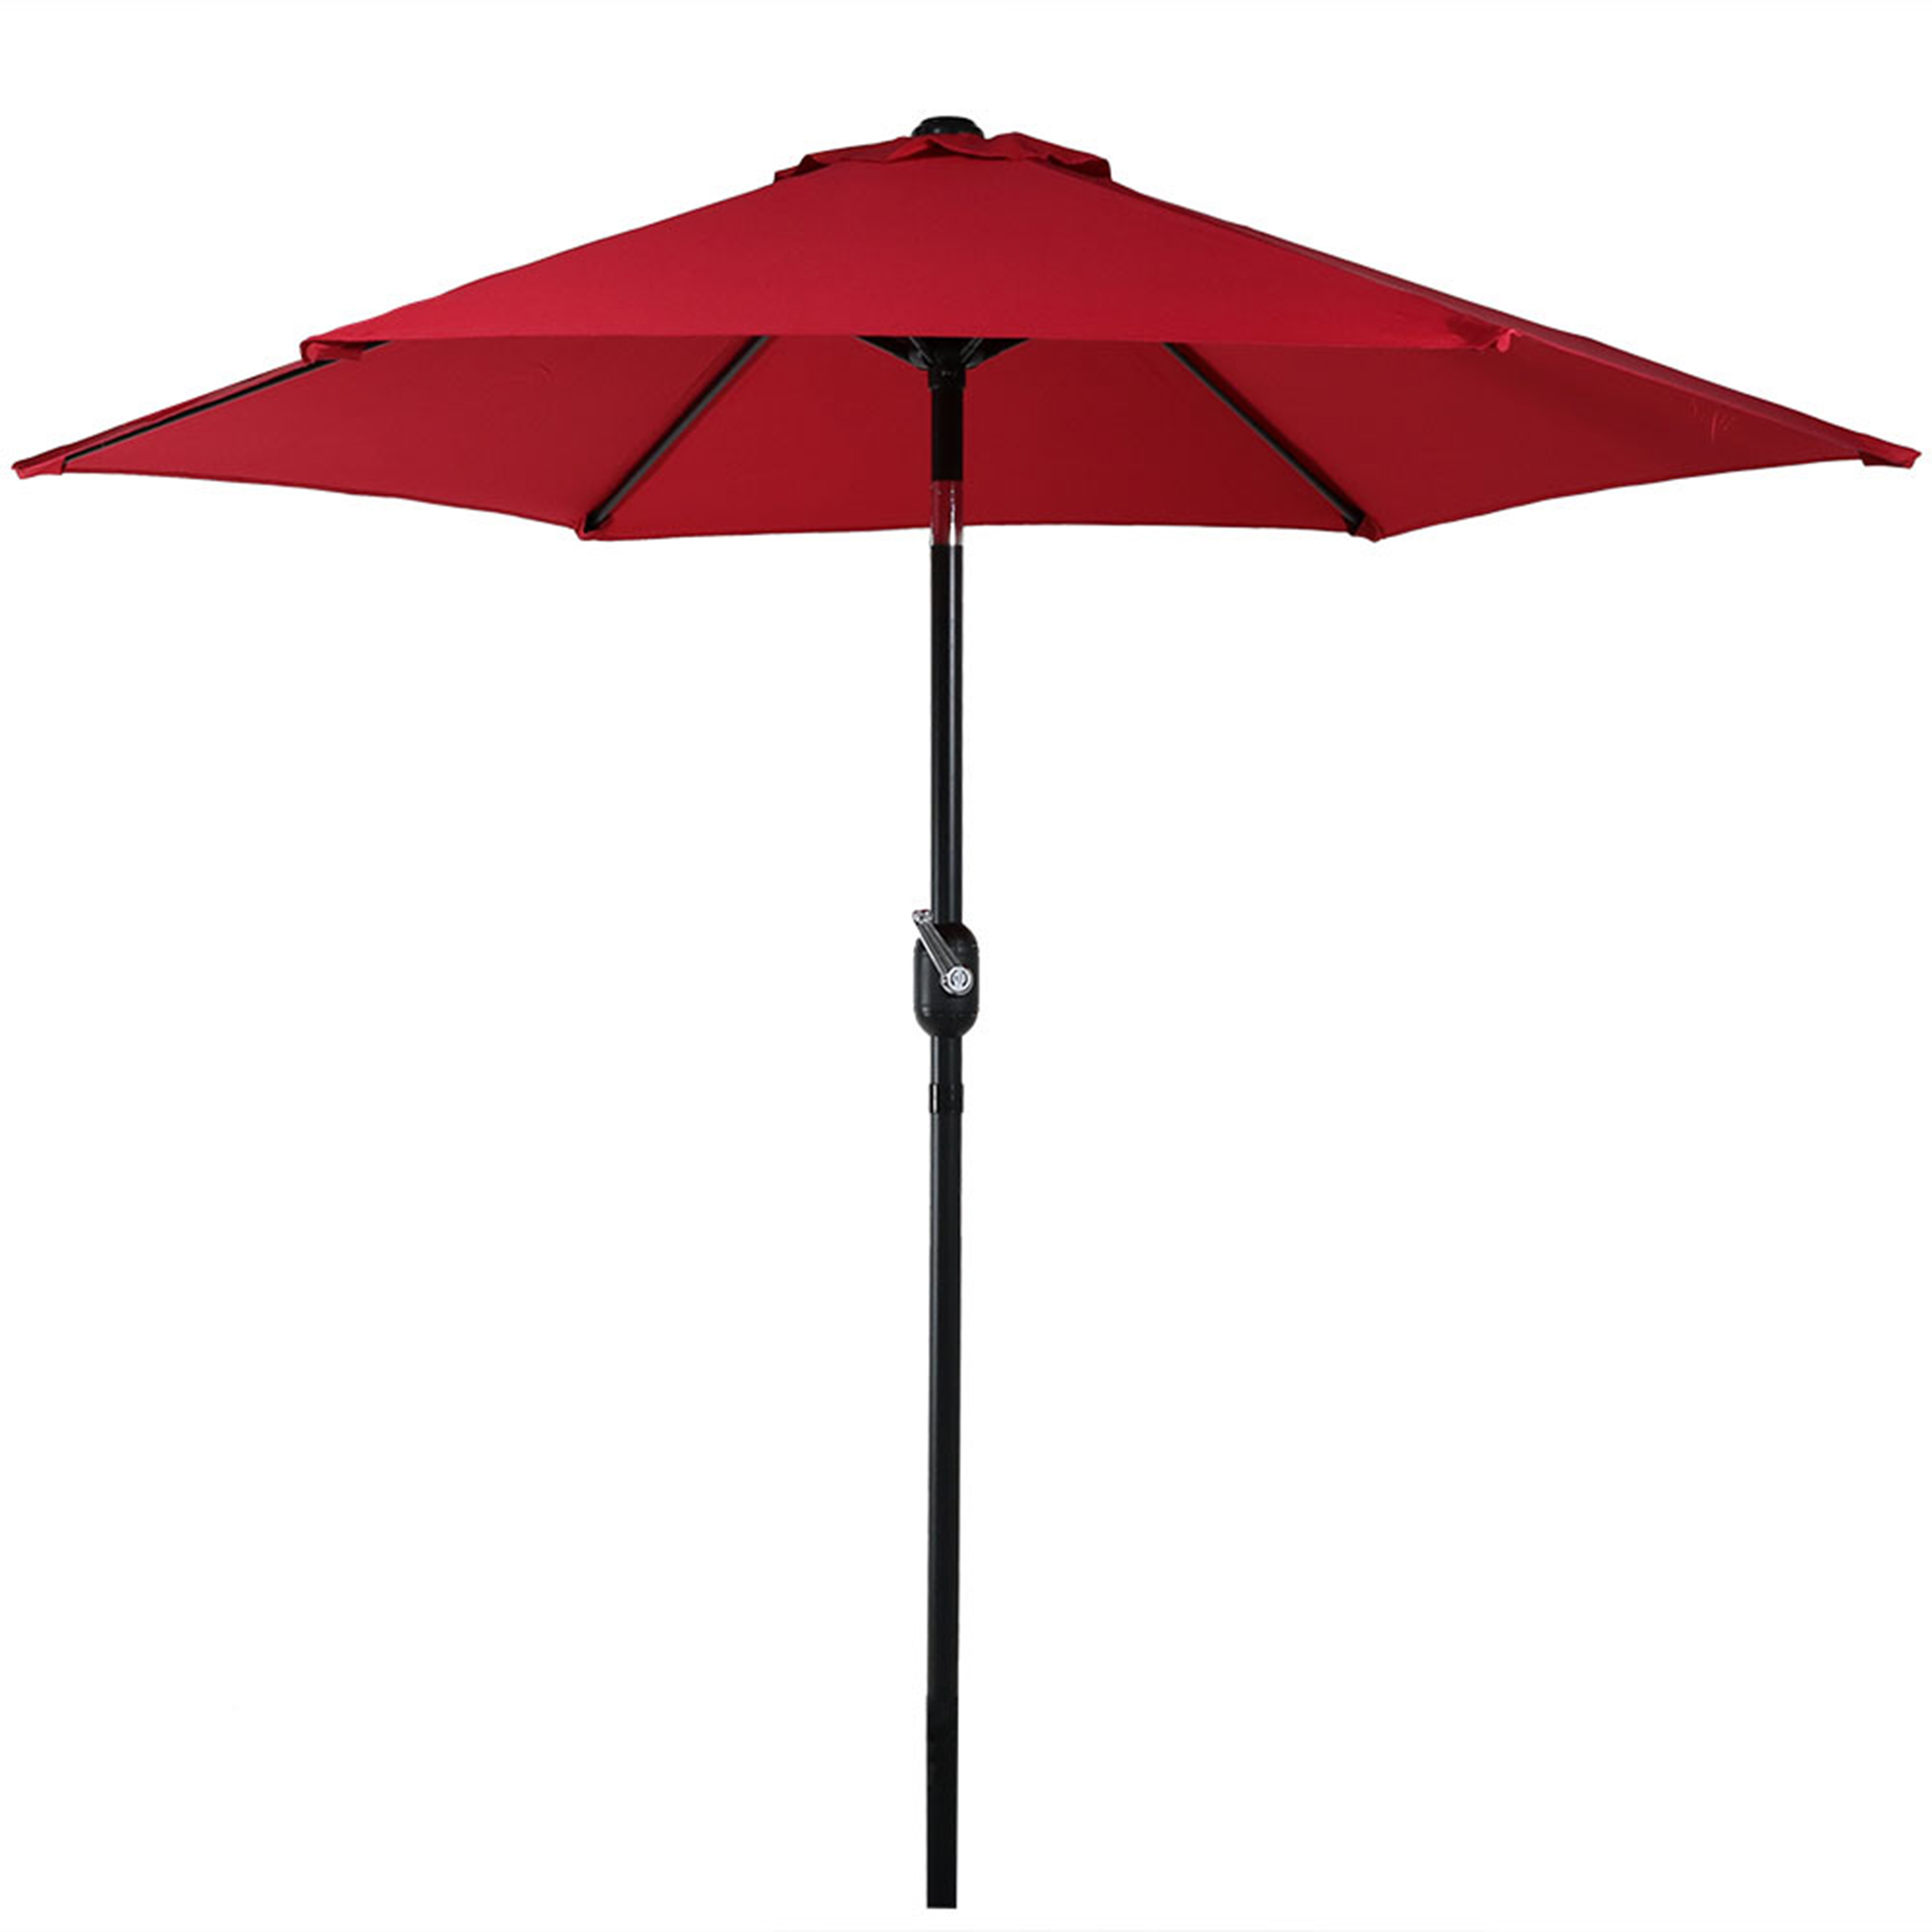 Sunnydaze Aluminum 7.5 Foot Patio Umbrella with Tilt & Crank, Red